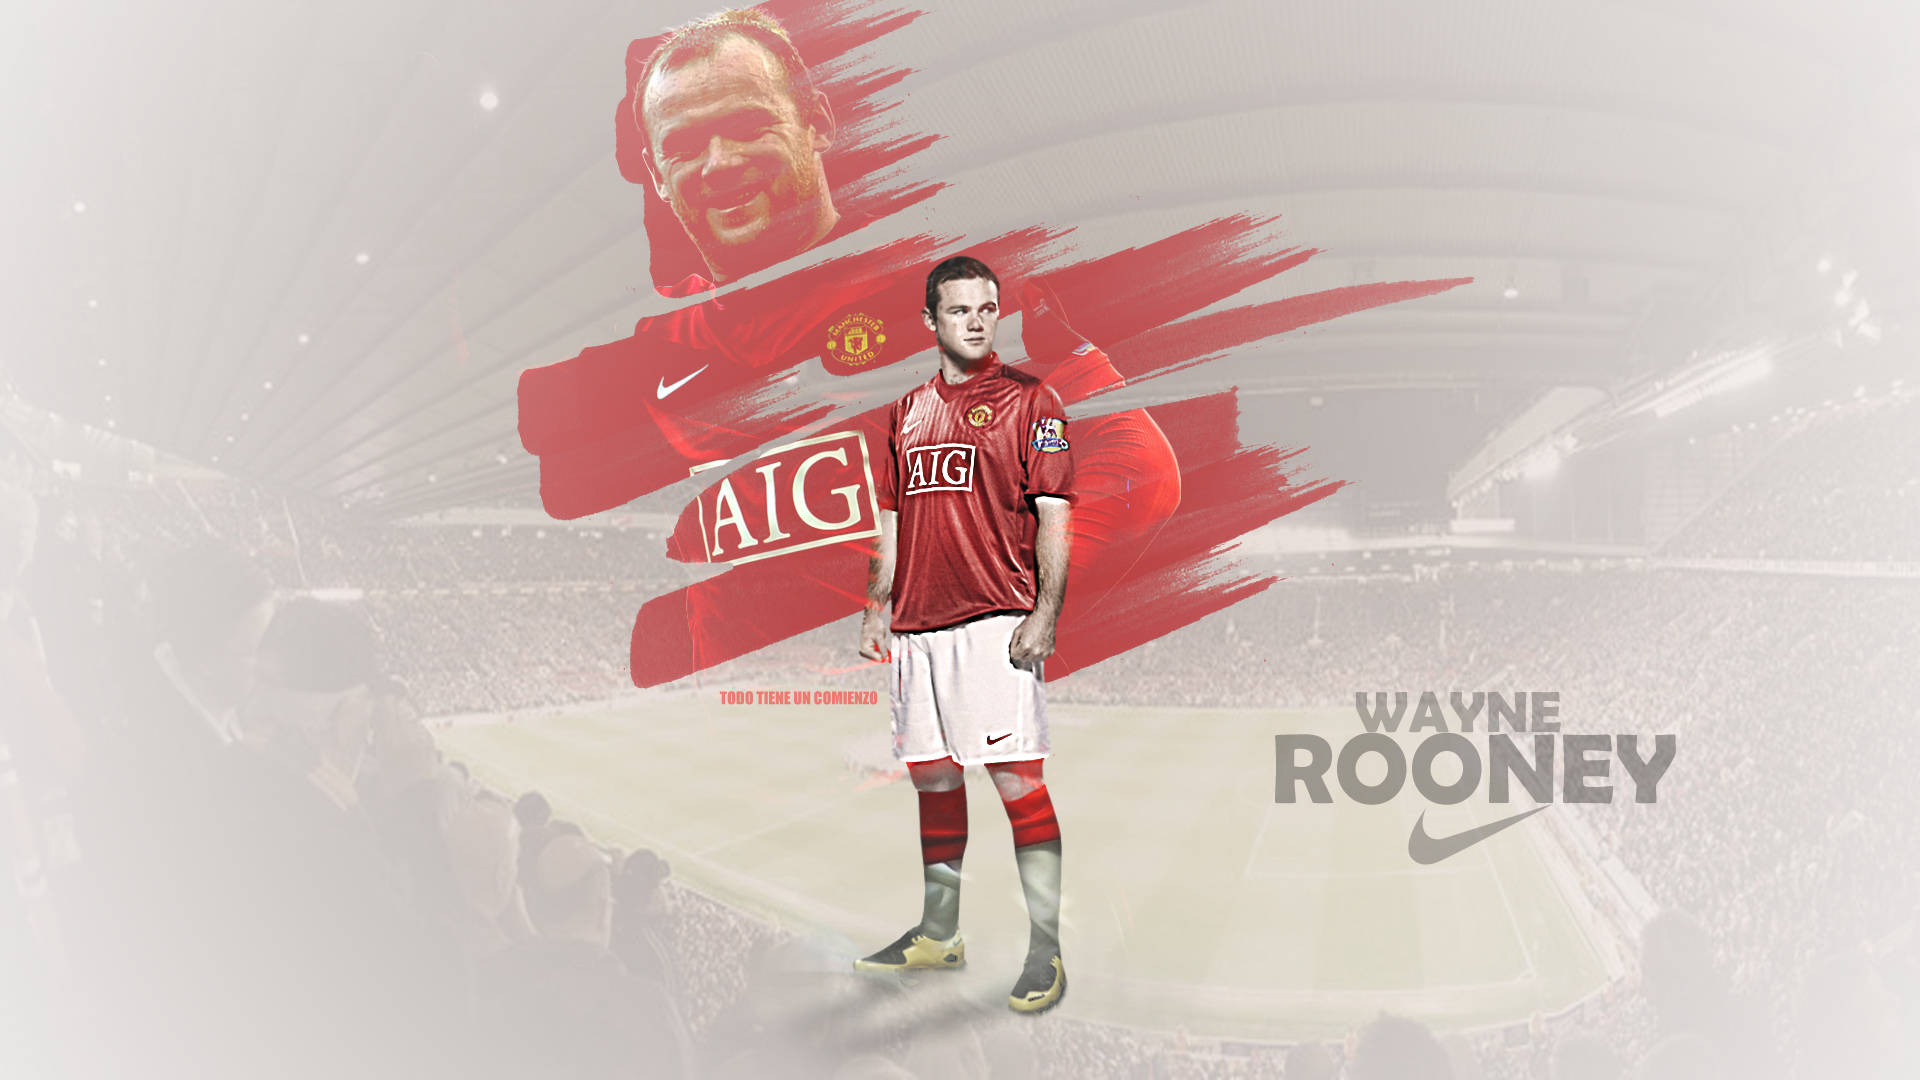 Wayne Rooney Aig